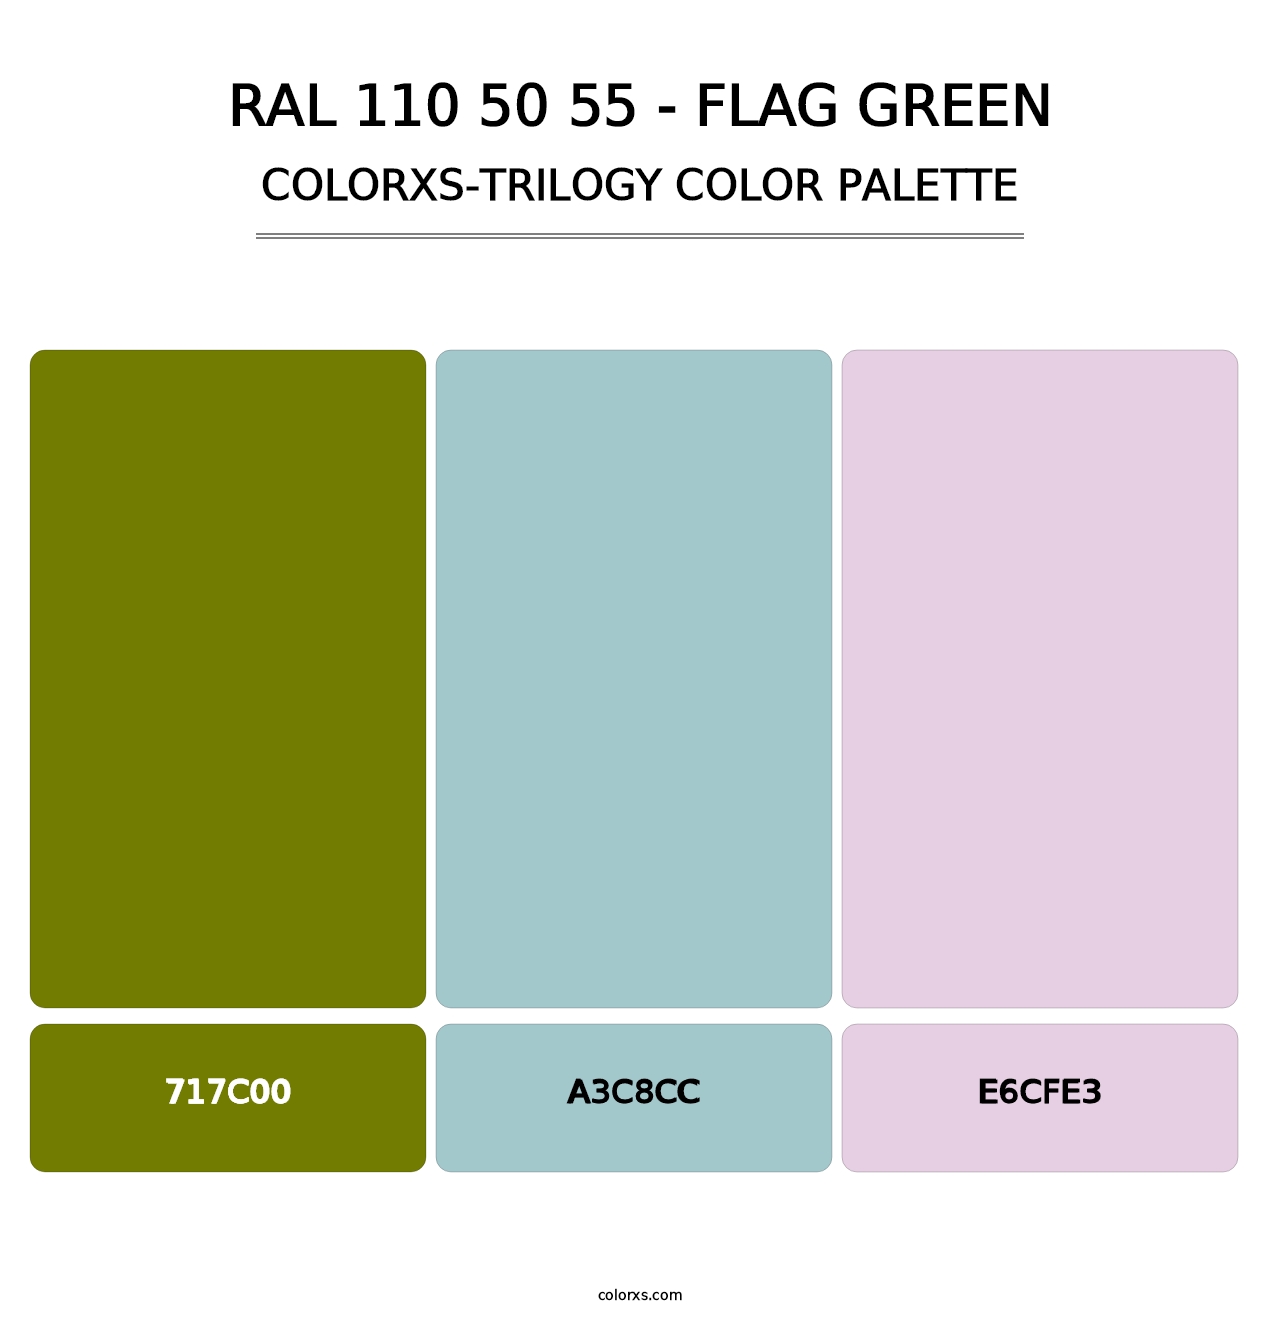 RAL 110 50 55 - Flag Green - Colorxs Trilogy Palette